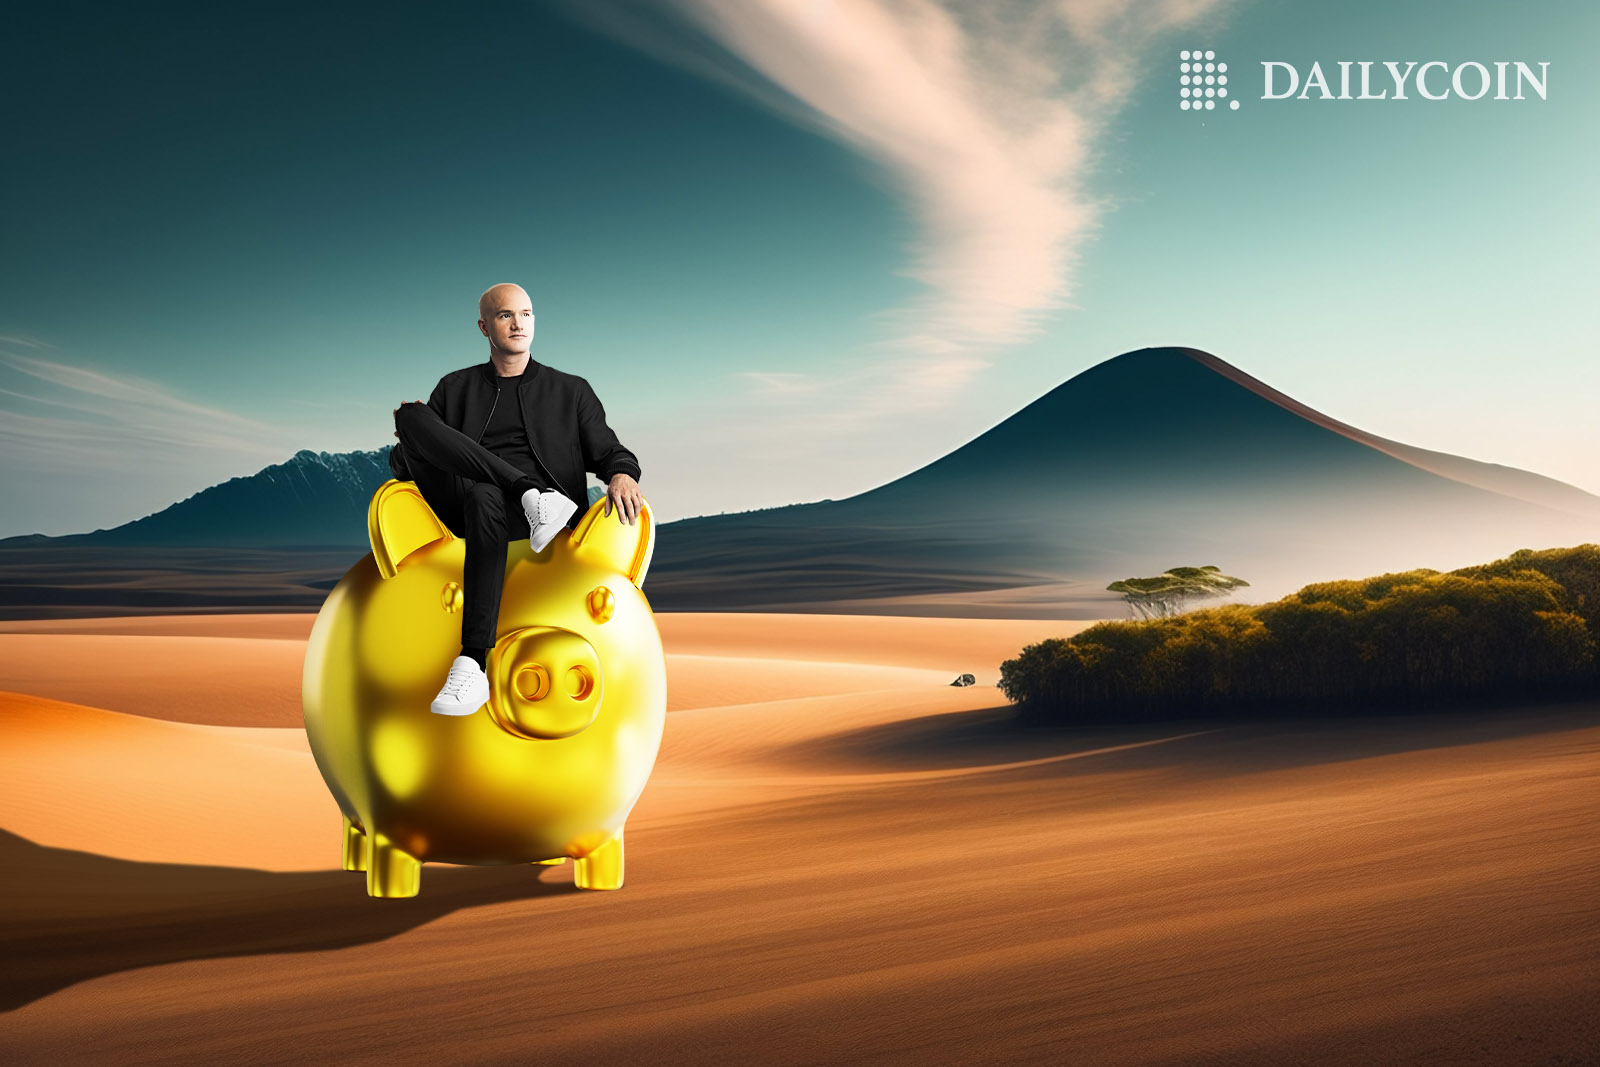 Brian Armstrong riding a golden piggybank in the desert.